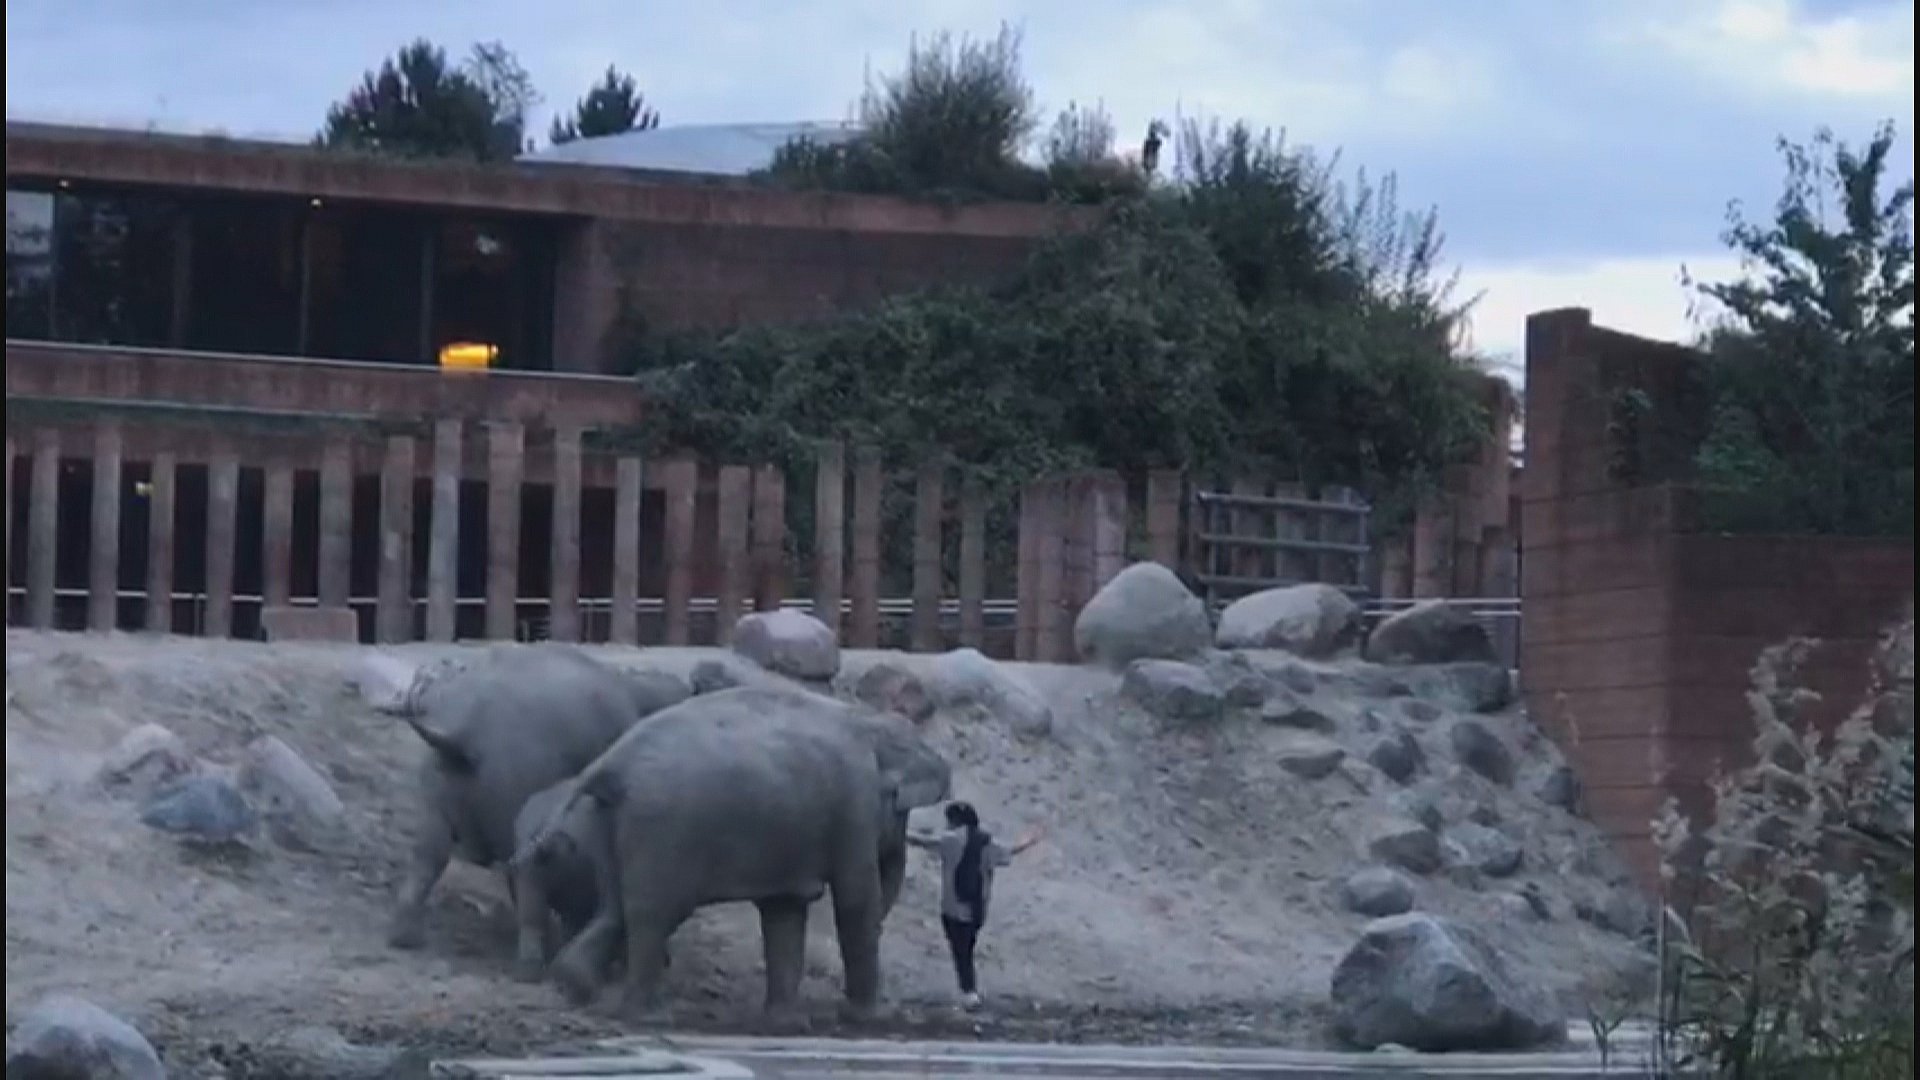 Mand hopper over hegnet til elefanterne i Zoo TV 2 Lorry